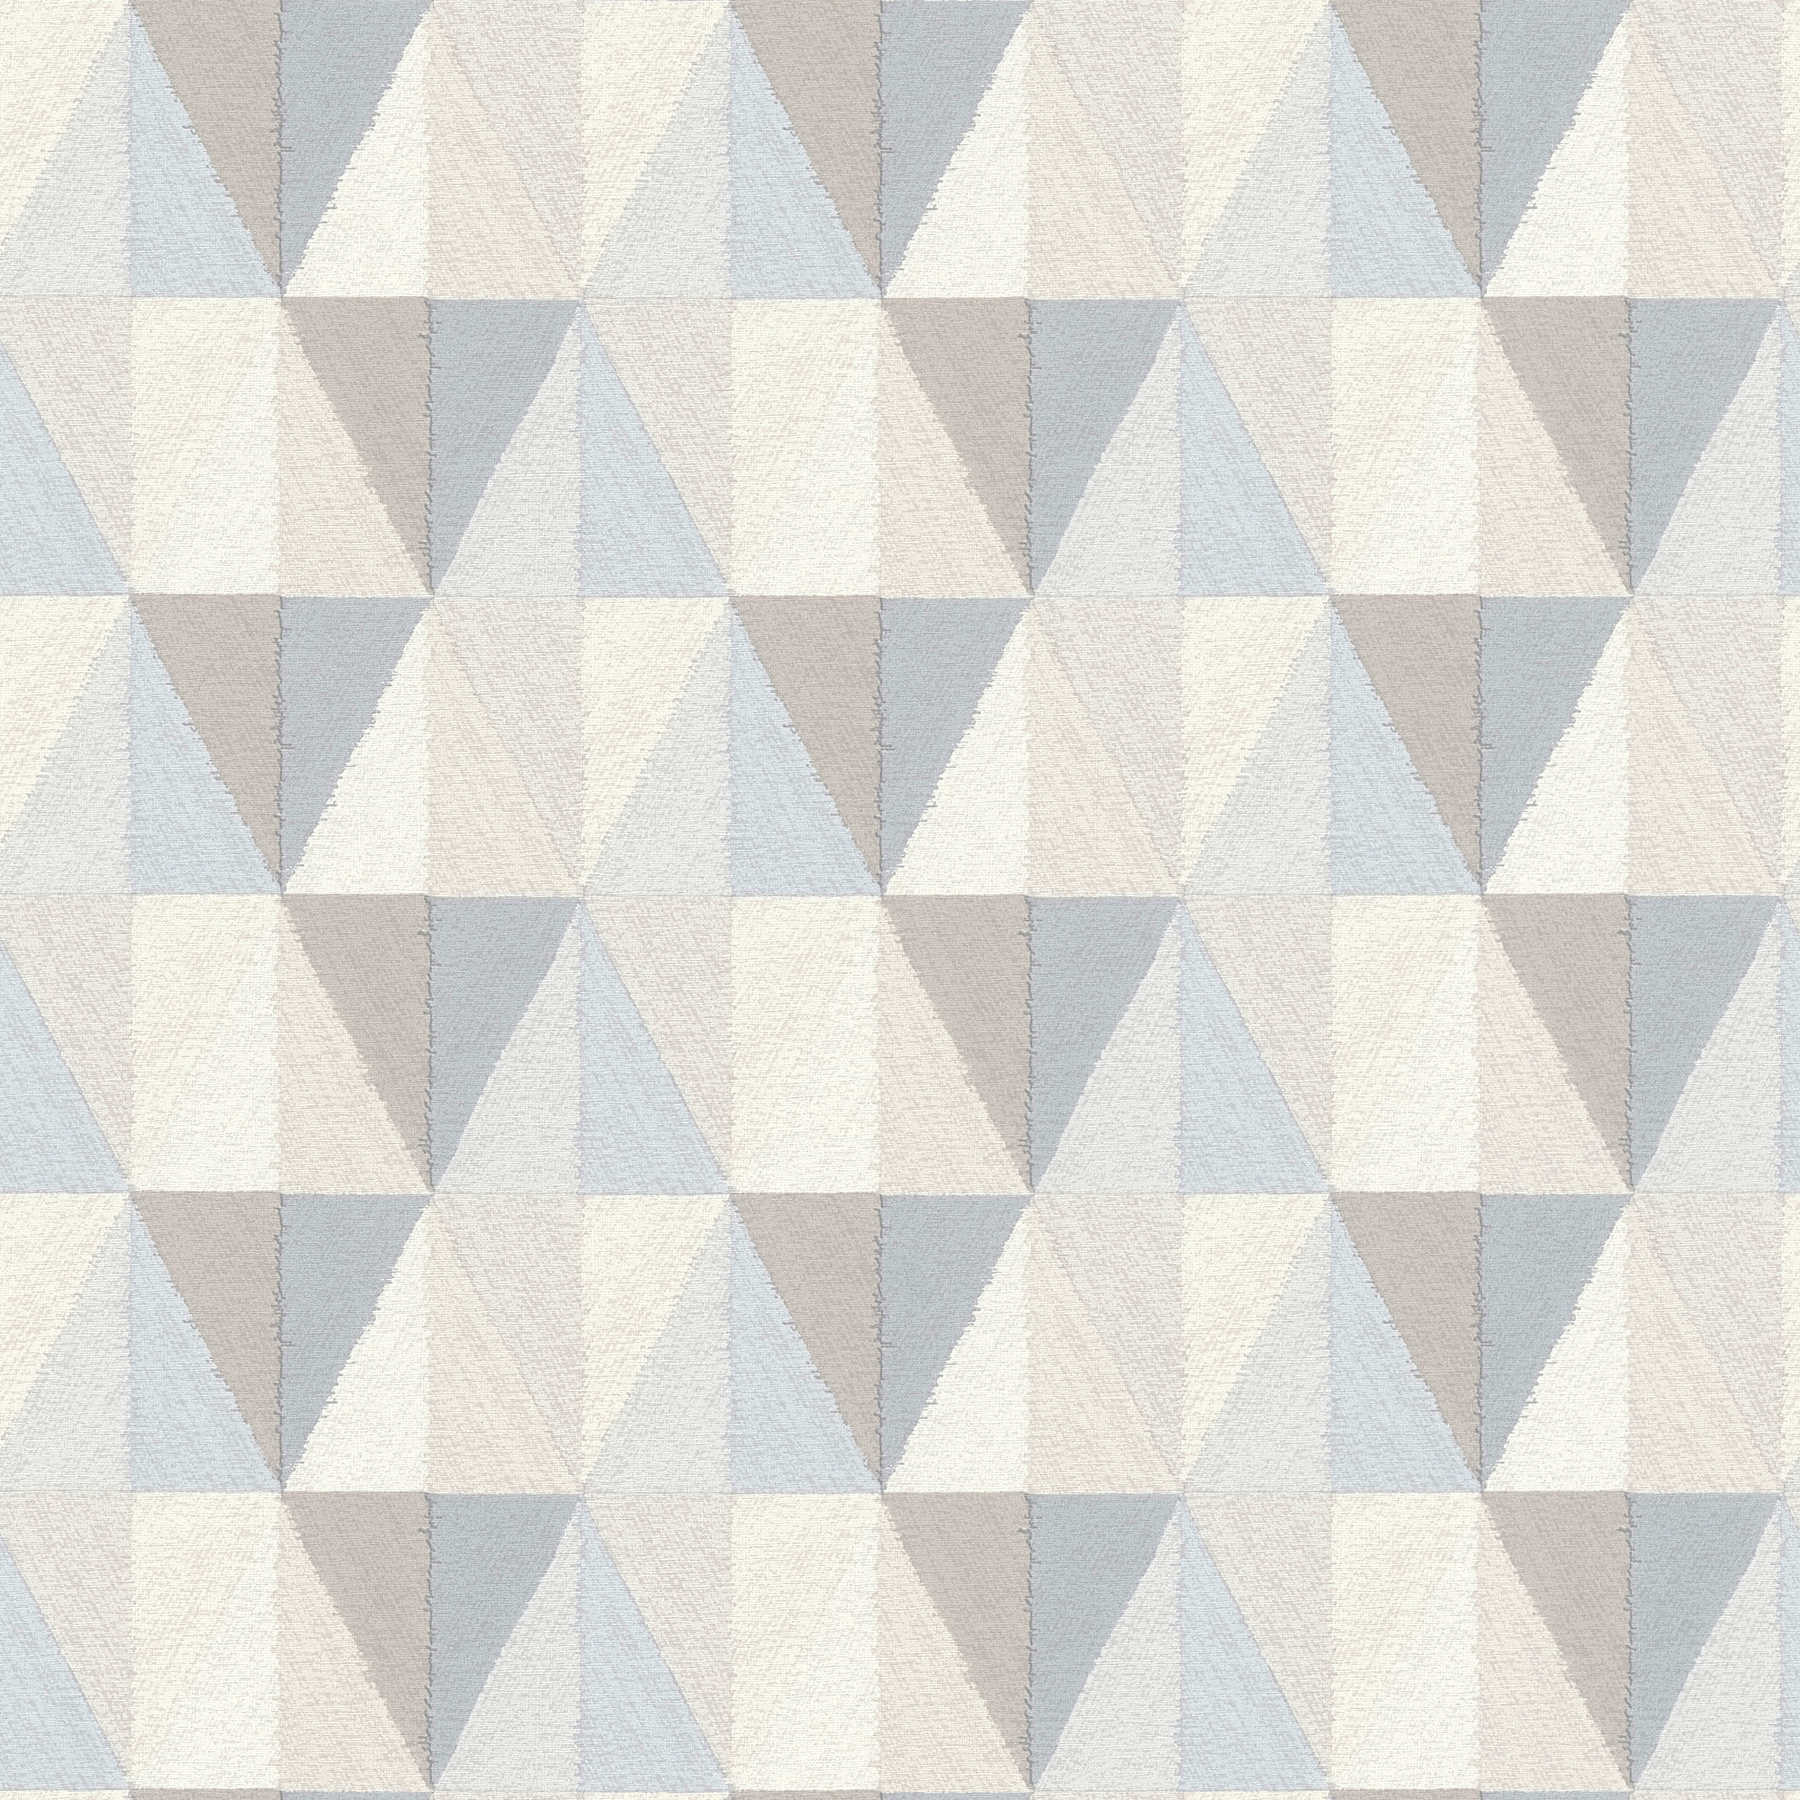         Wallpaper geometric pattern & colour facets - blue, grey
    